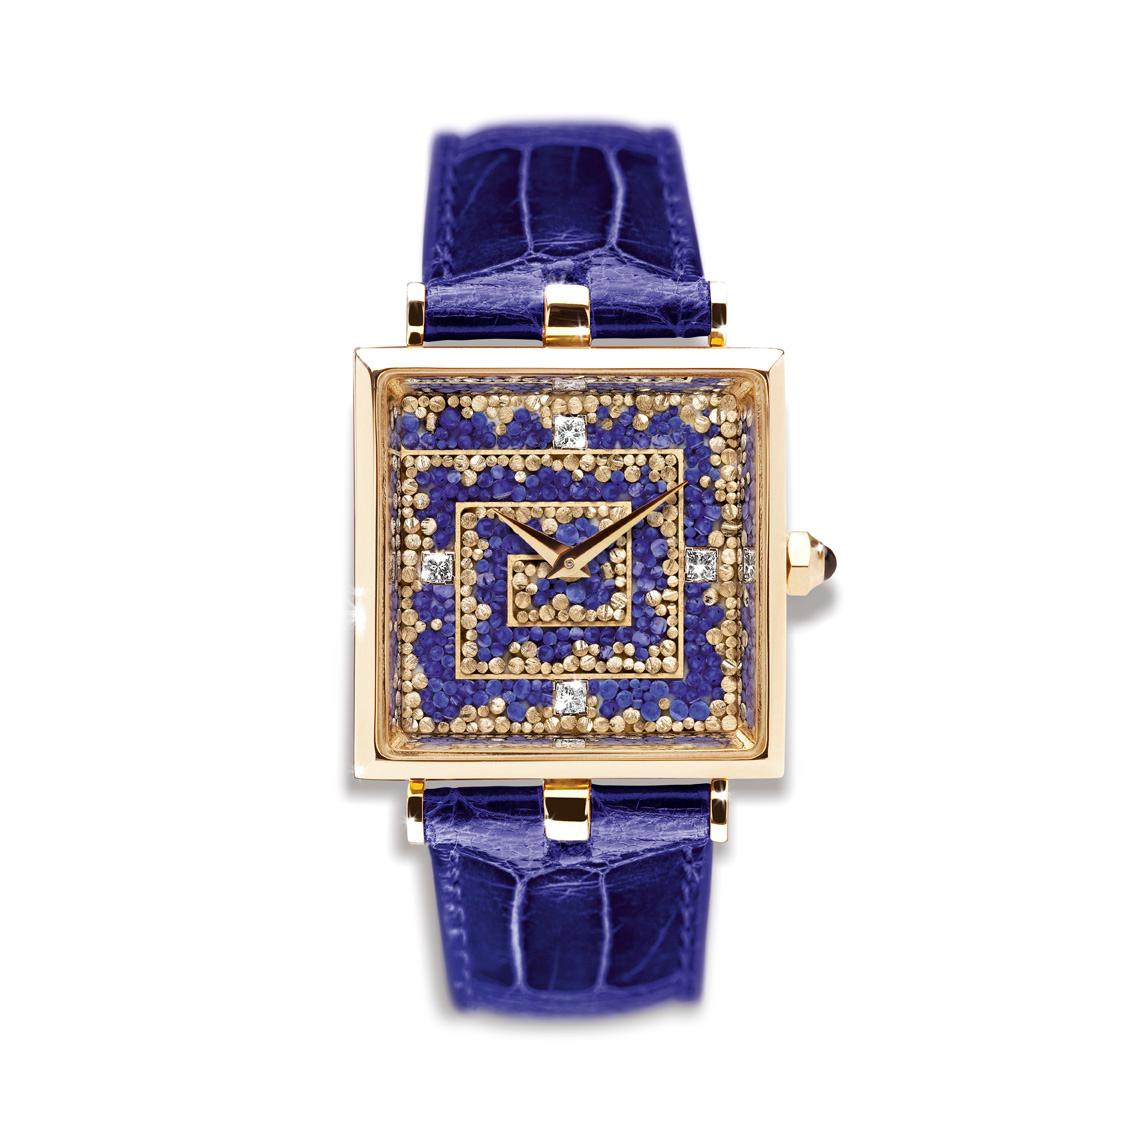 Brilliant Cut Sicis Labirinto Micromosaic Diamond Gold Beige Watch For Sale